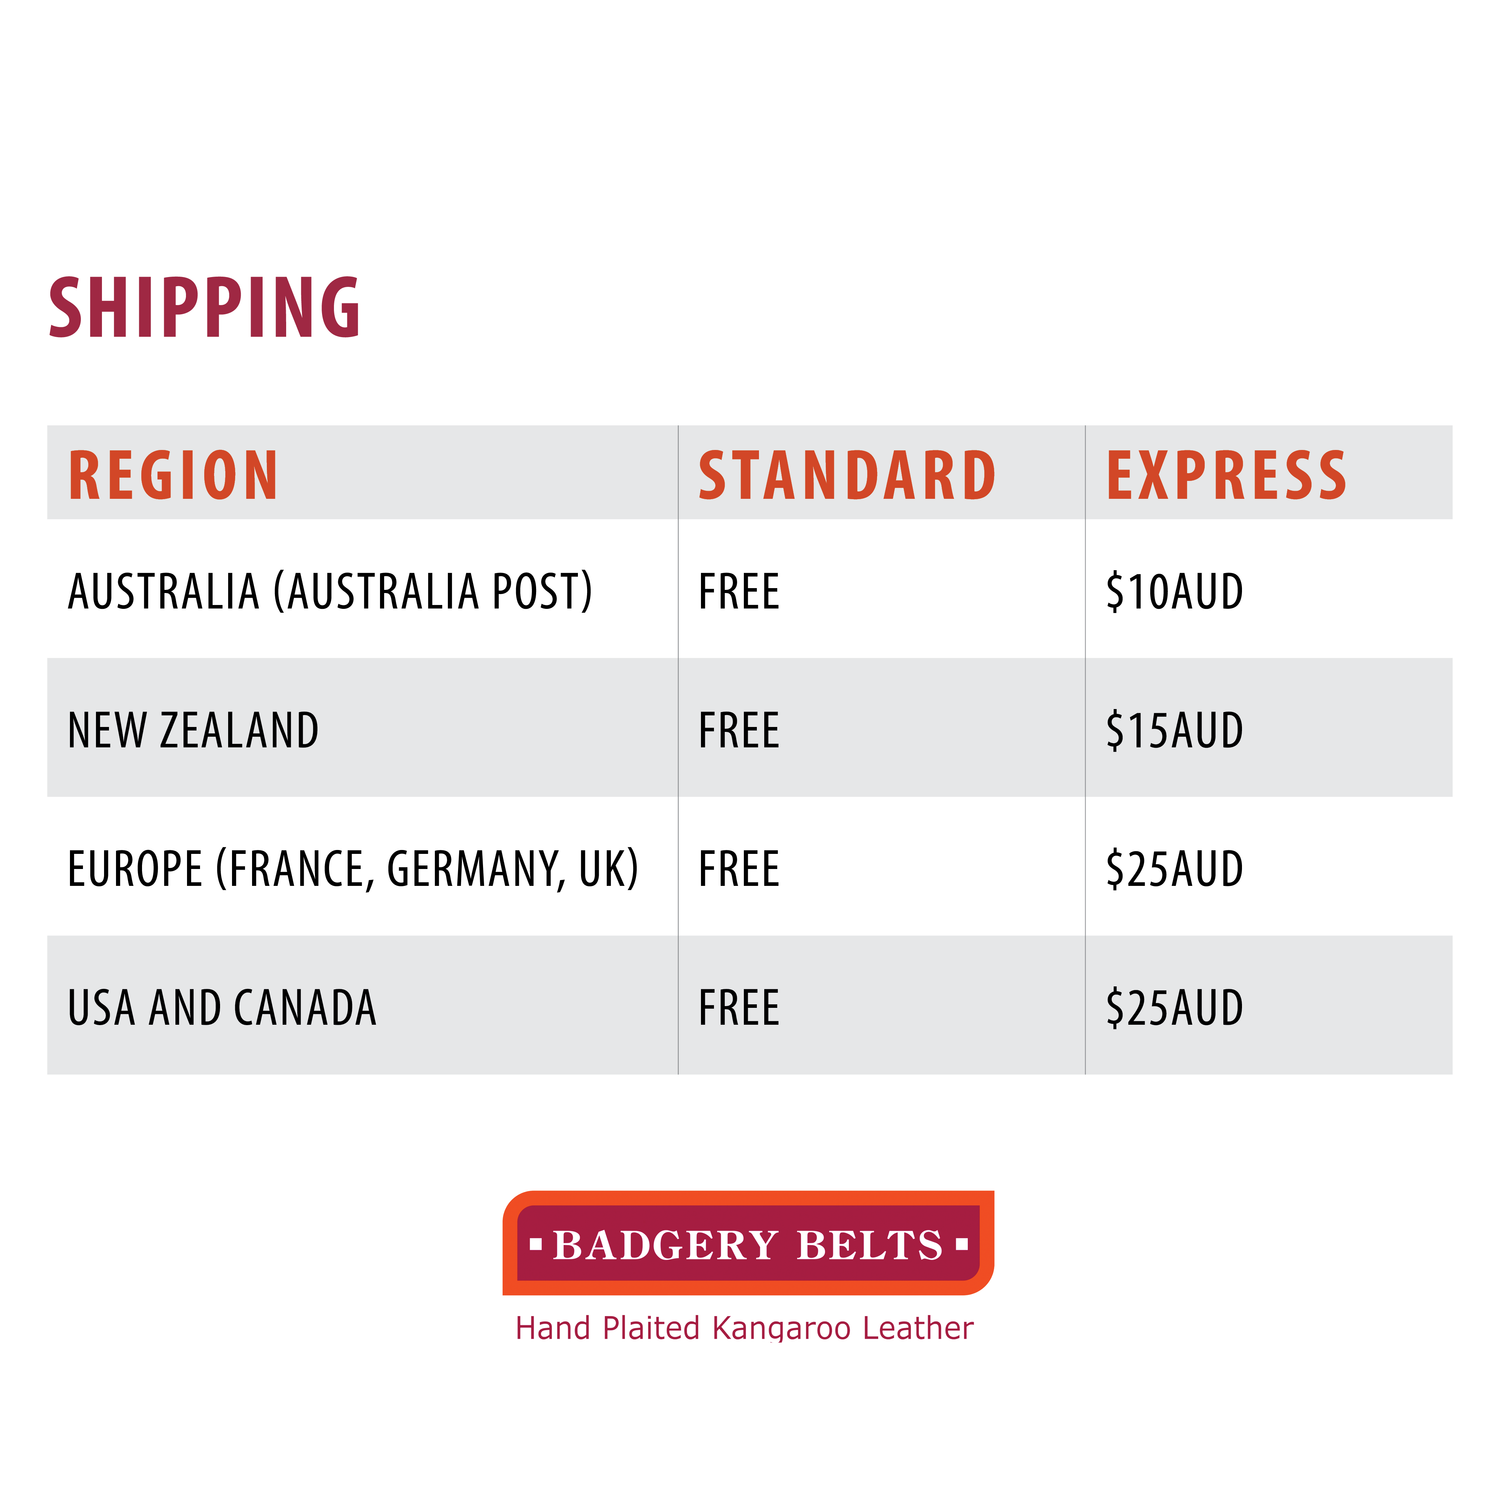 Badgery Blets Free Shipping world wide table. Australia: Free, Newzeland: Free, Europe: Free, USA + Canada: Free